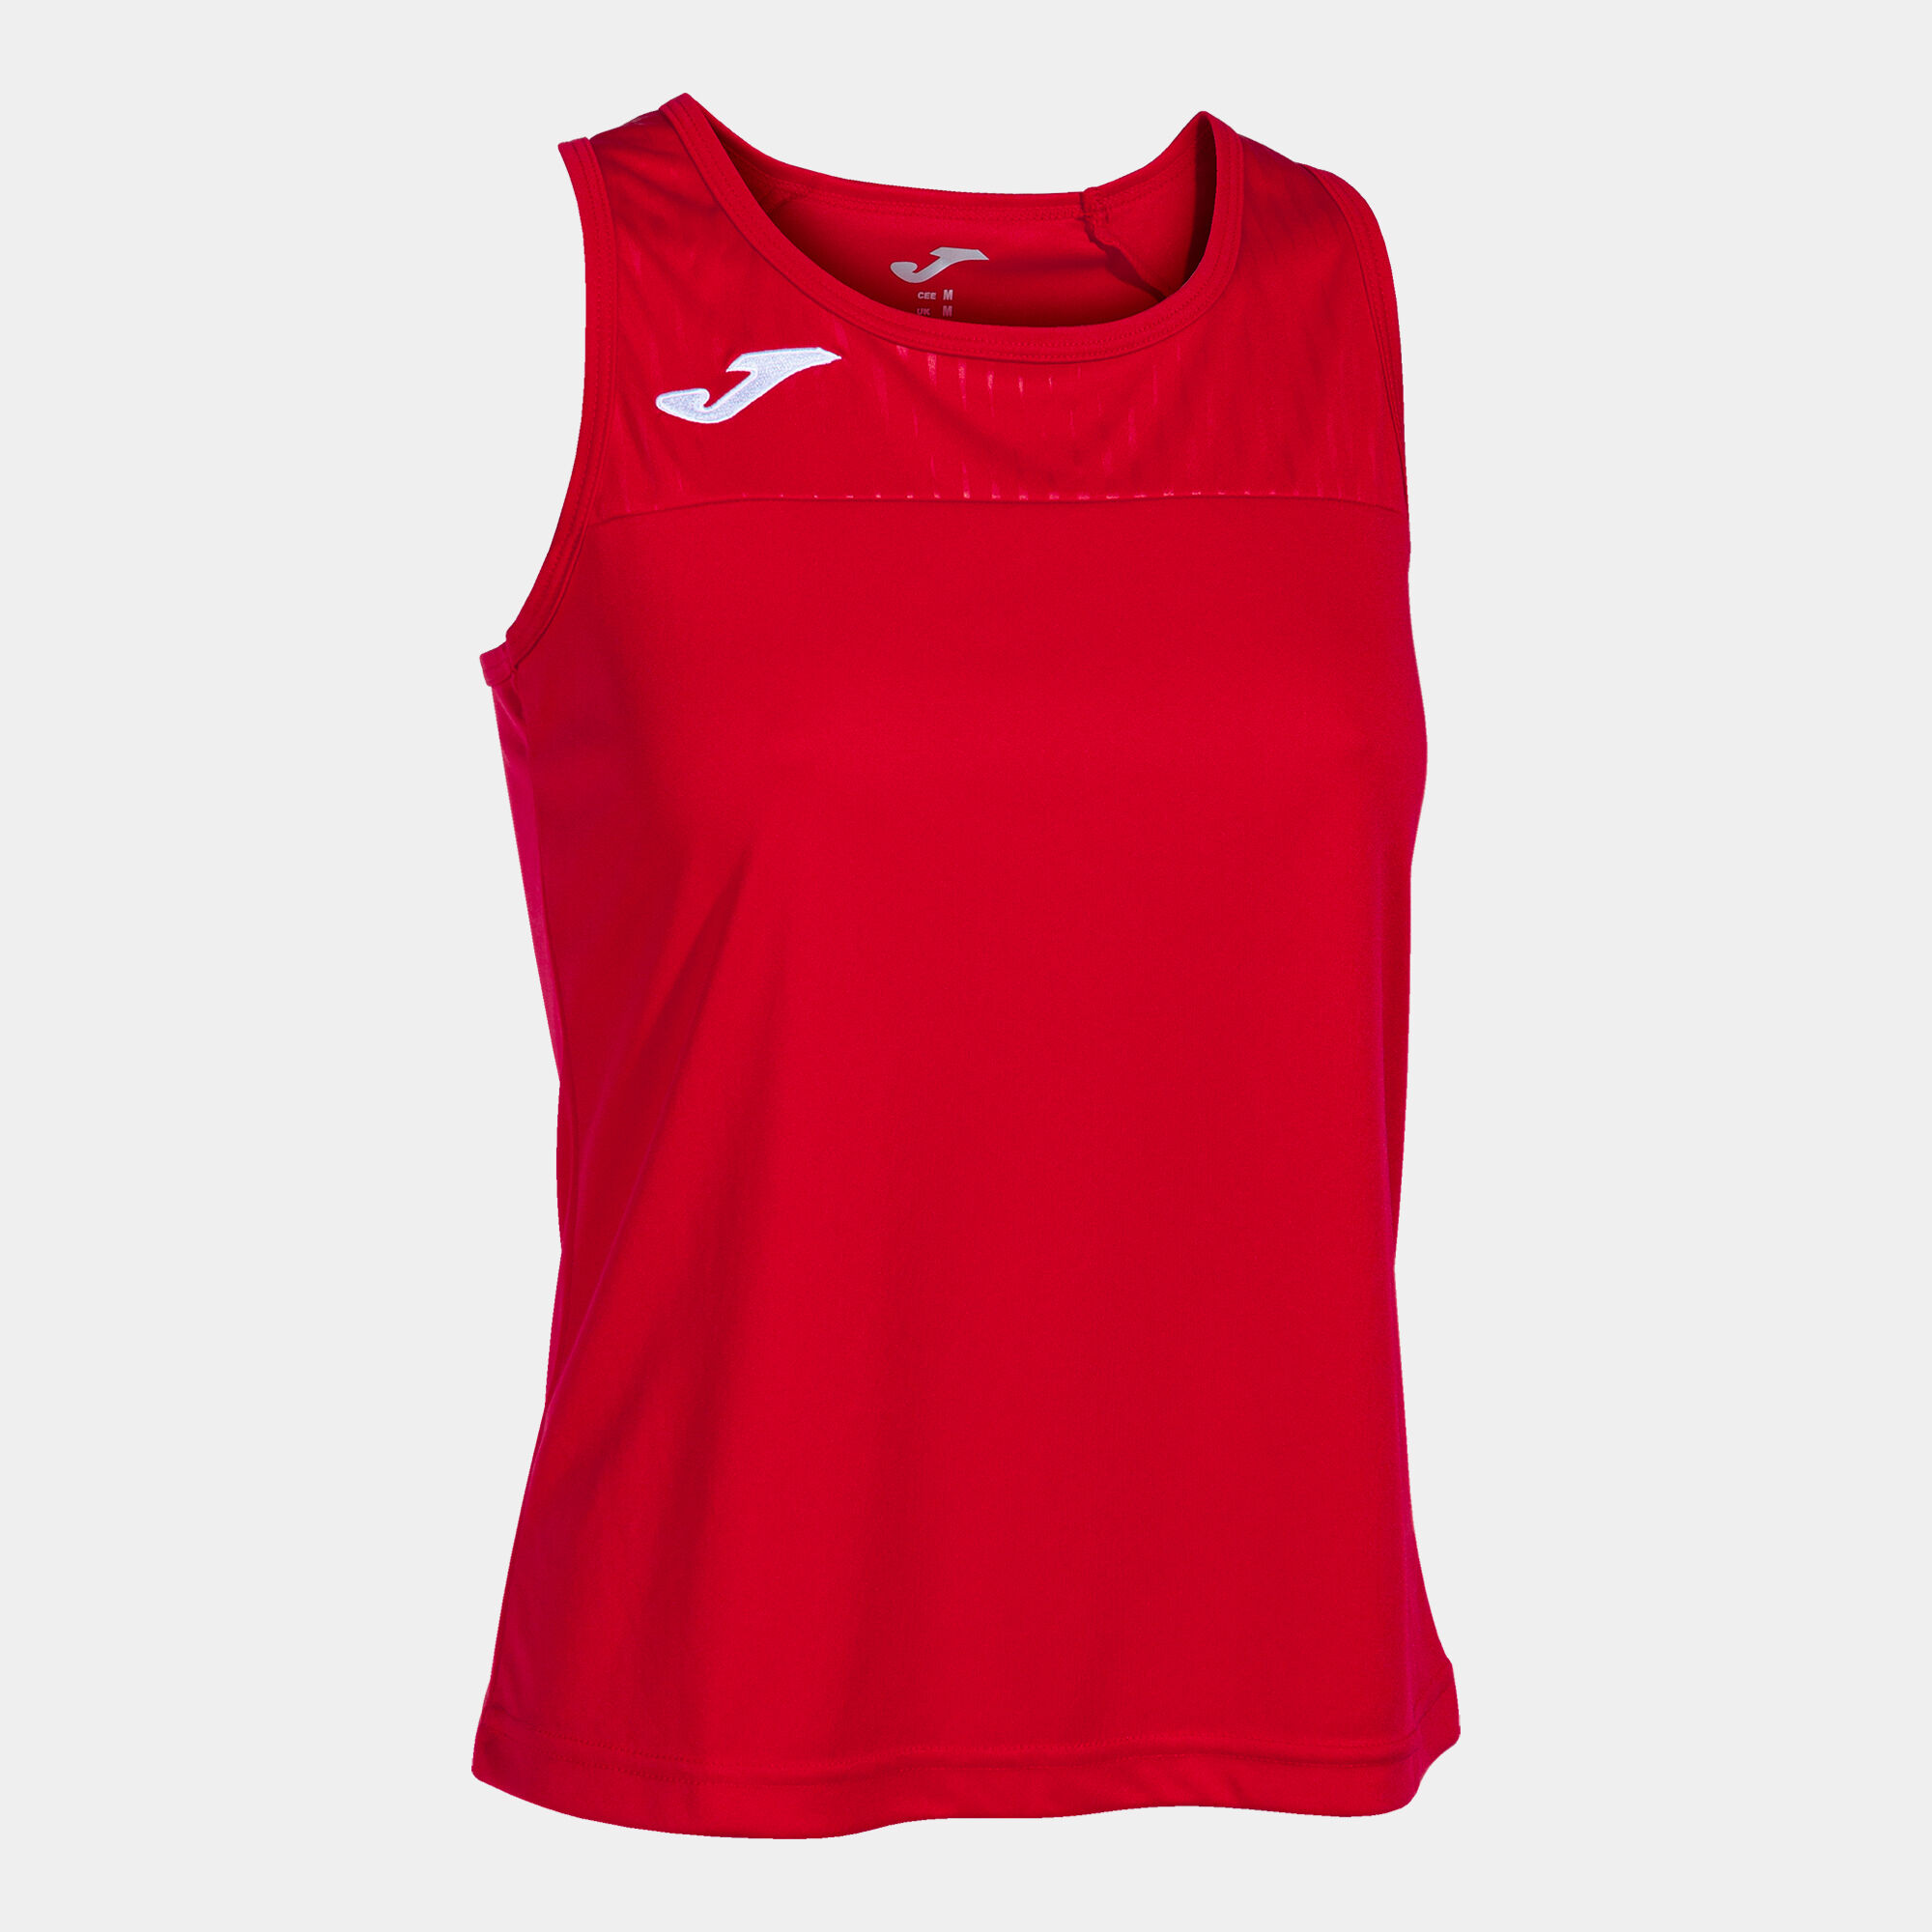 Camiseta tirantes mujer Montreal rojo